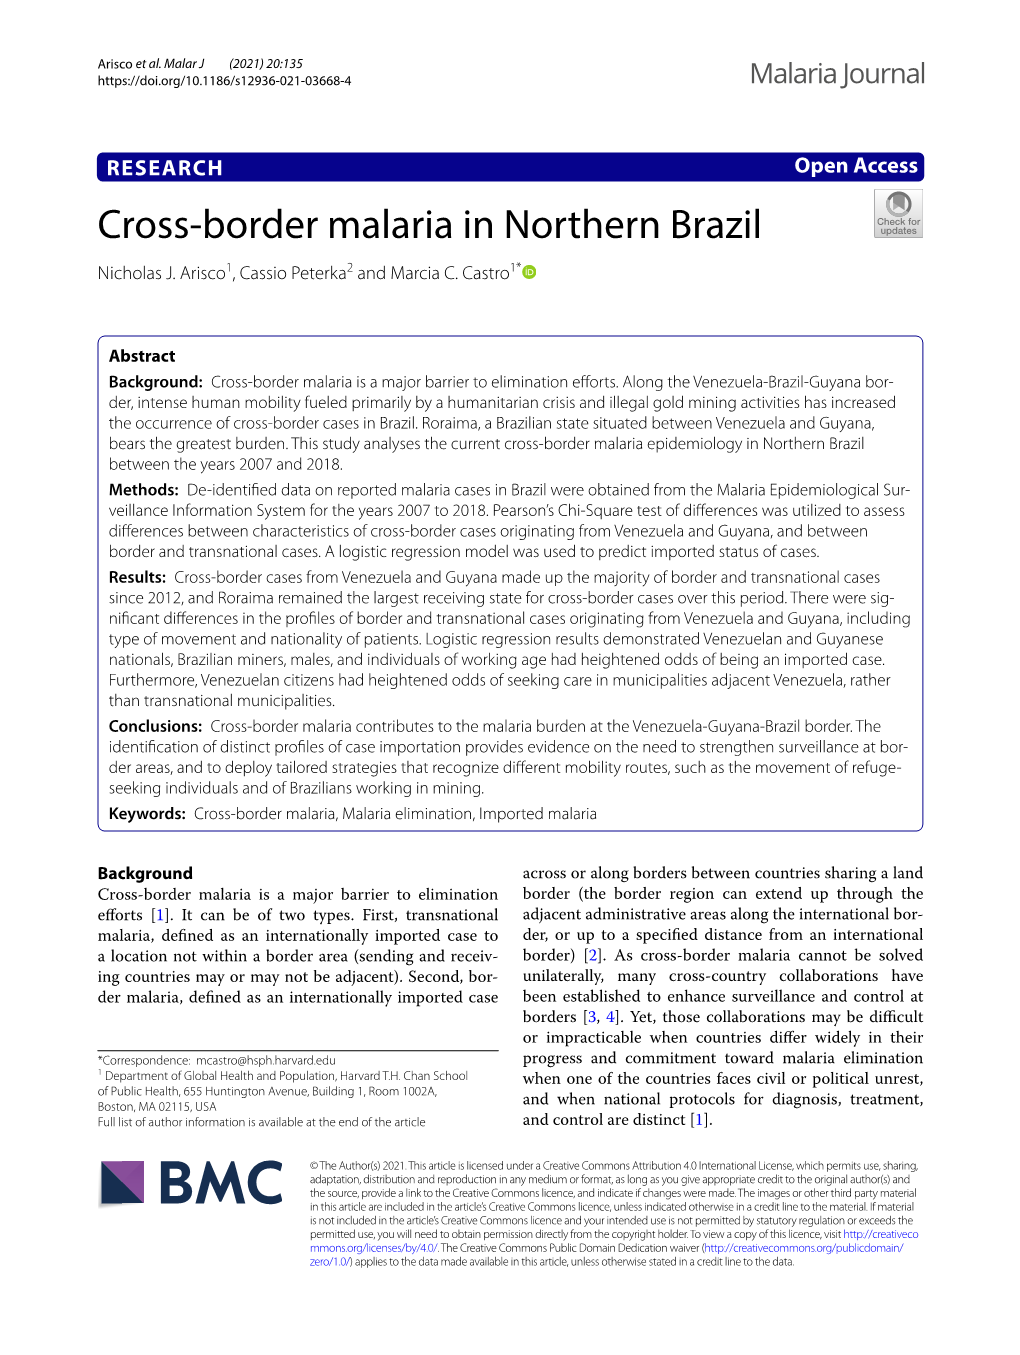 Cross-Border Malaria in Northern Brazil